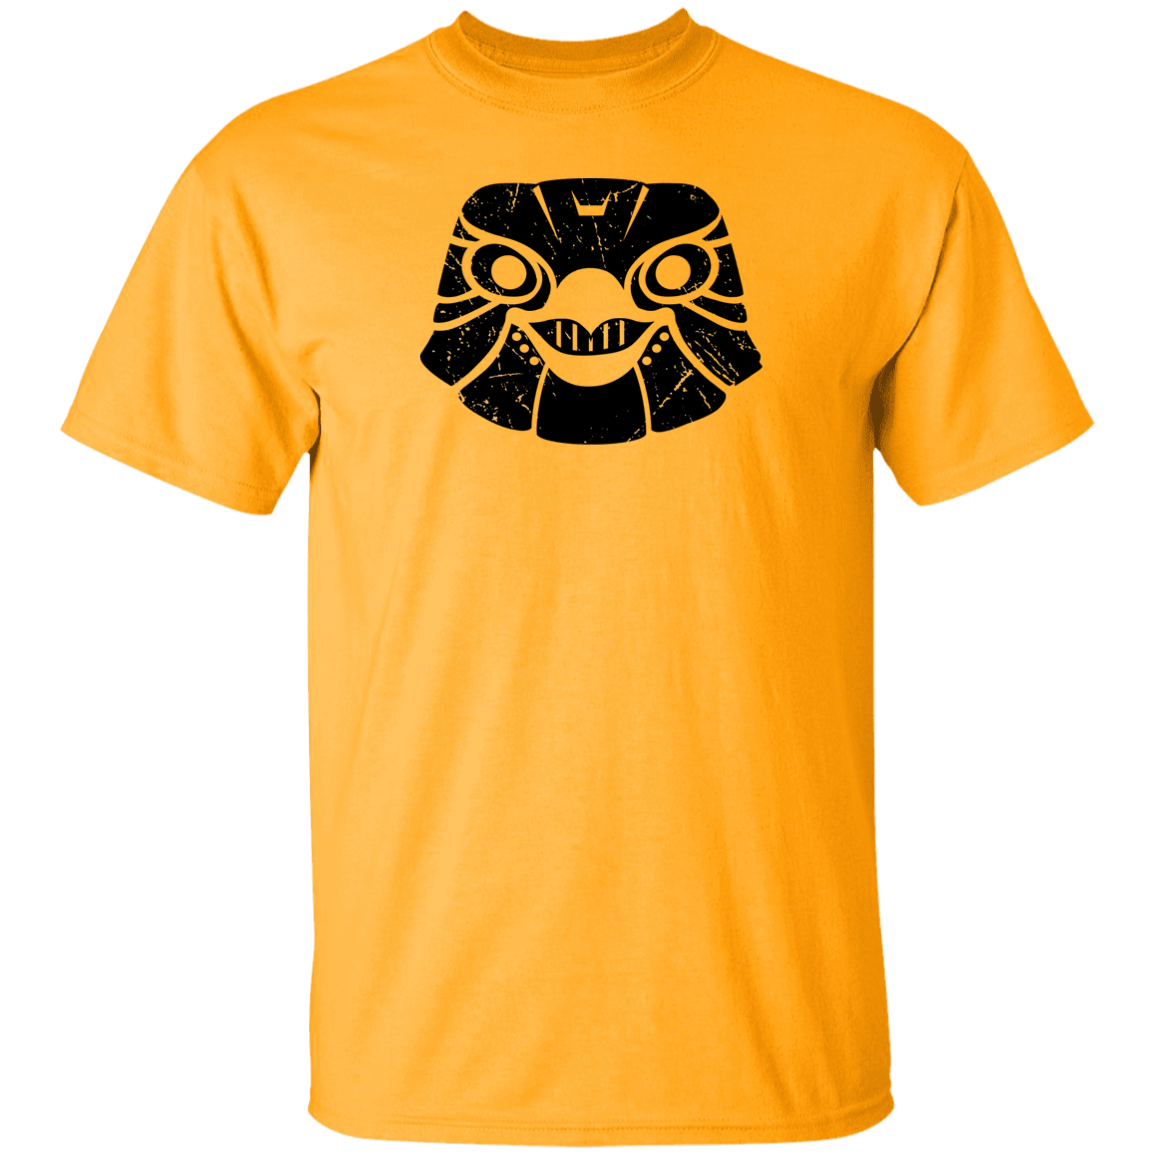 Black Distressed Emblem T-Shirt for Kids (Falcon/Swift)